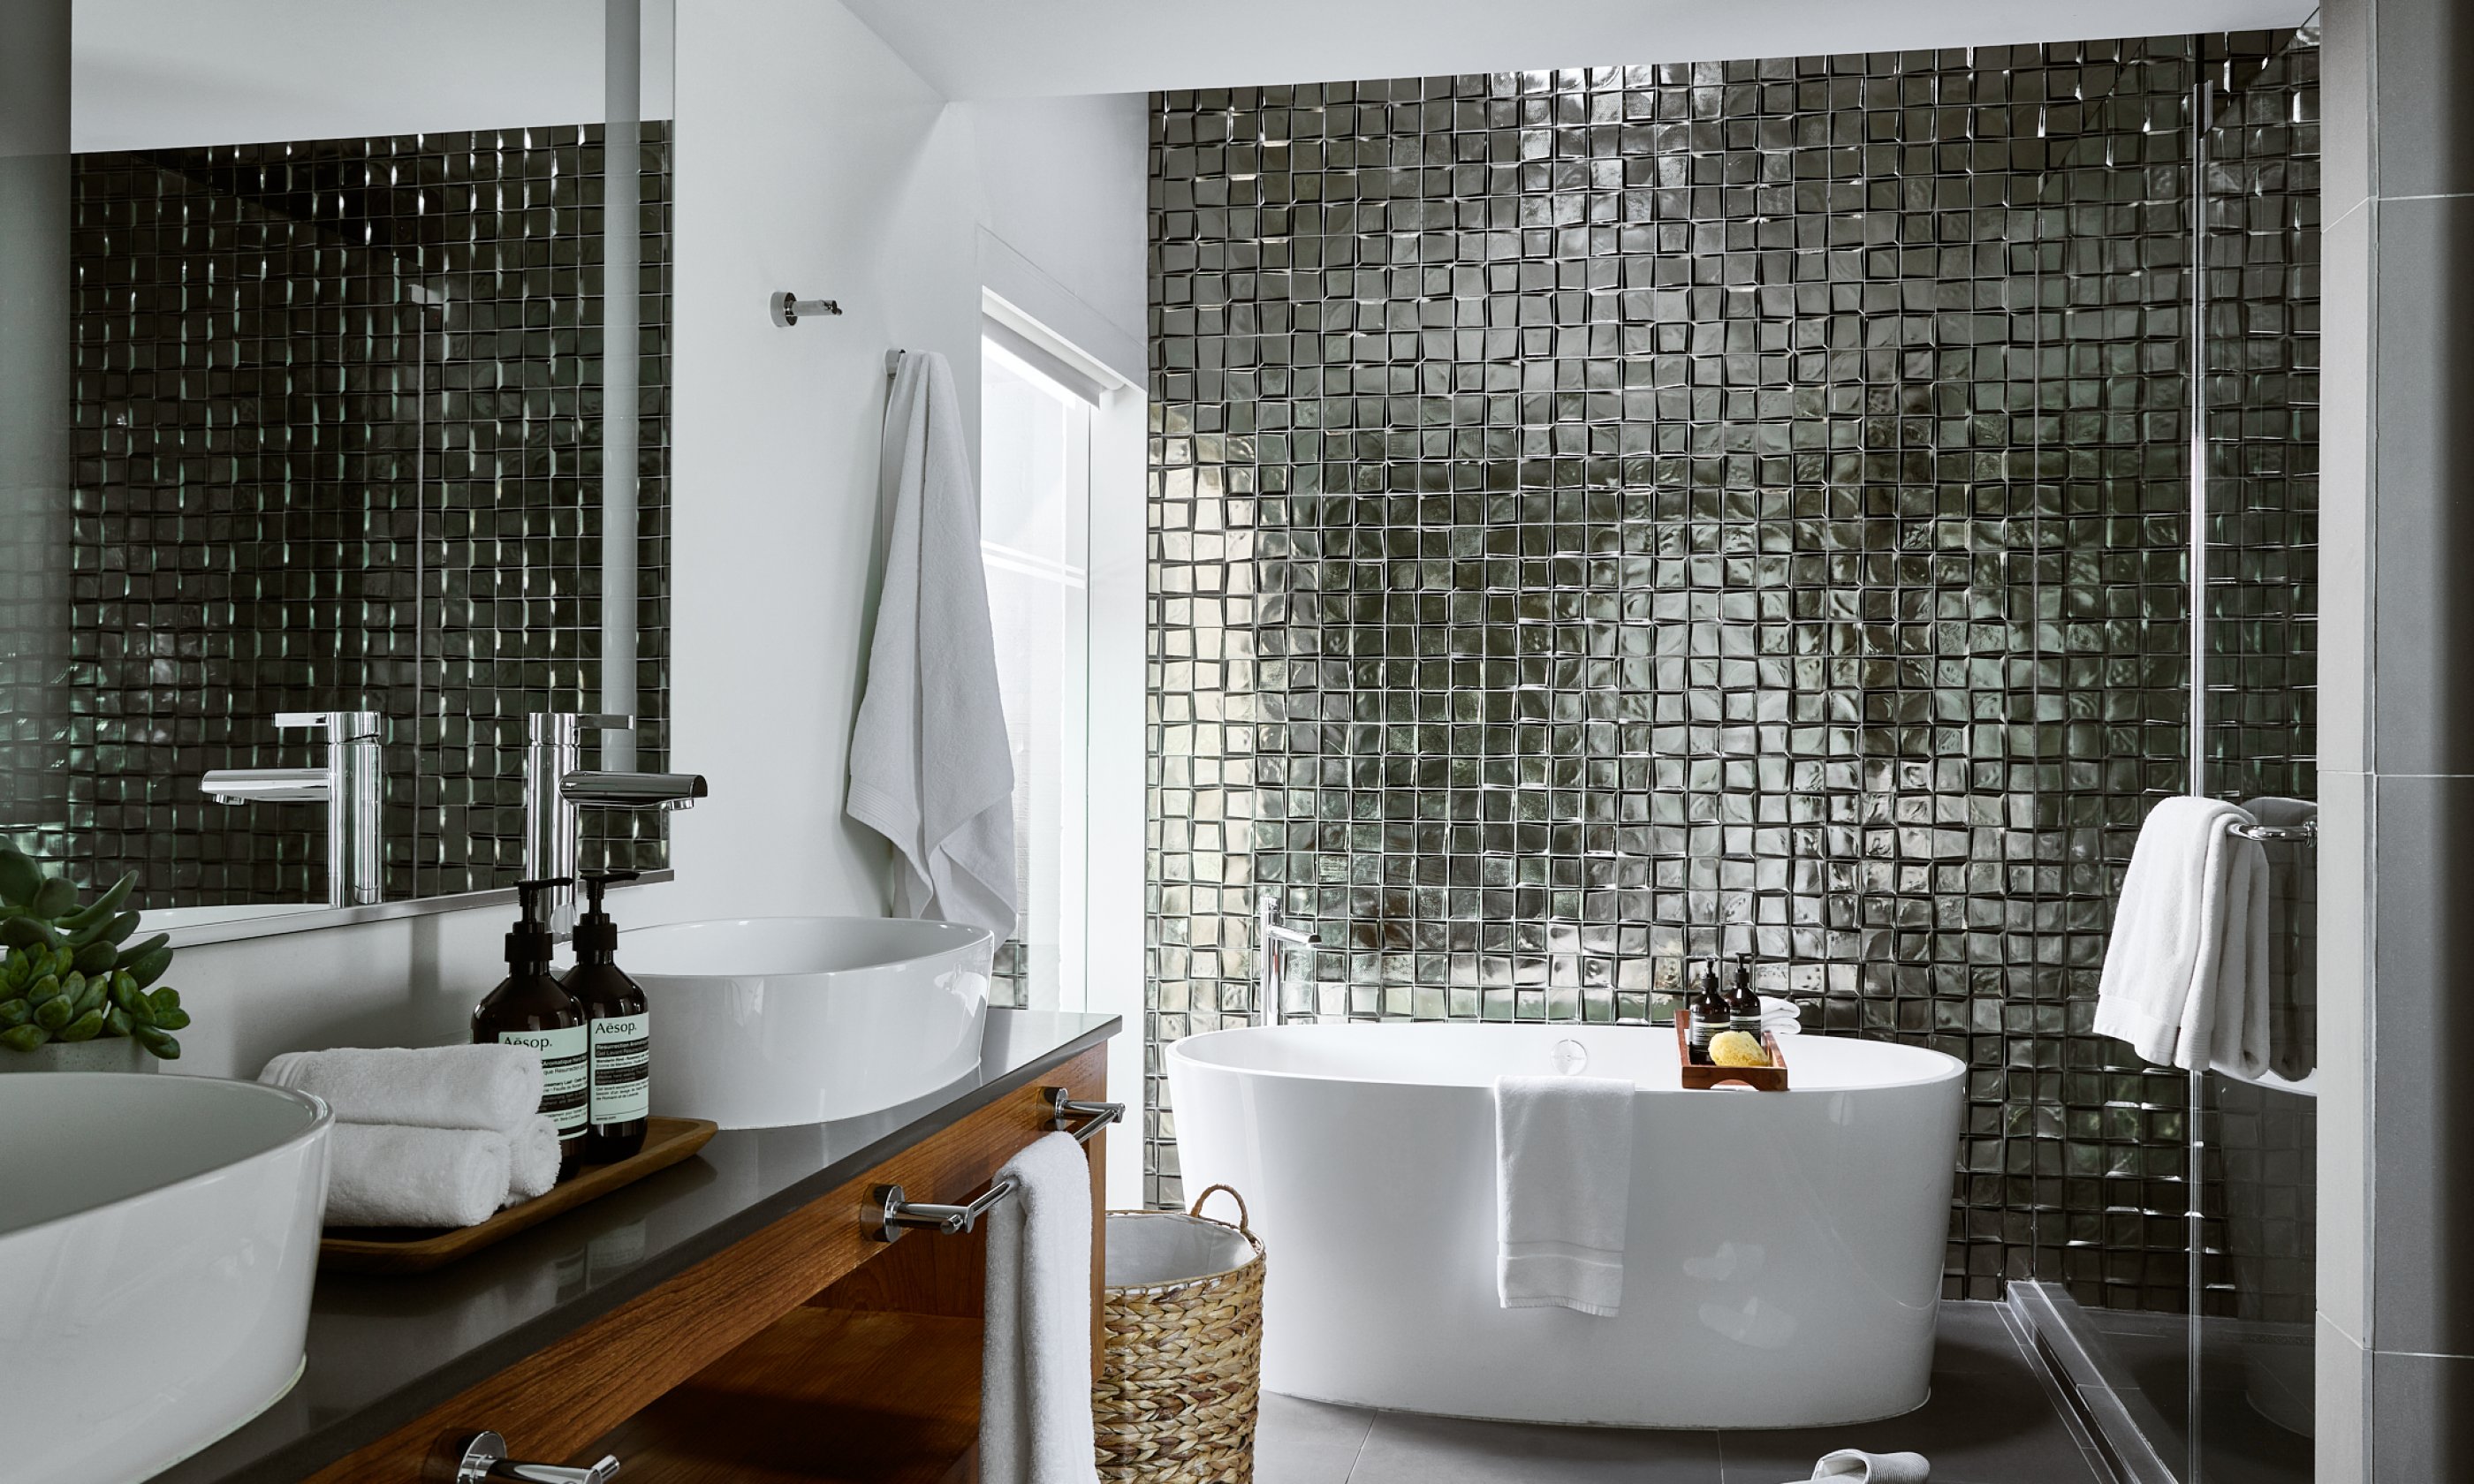 Metallic tiled bathroom with two sinks, vanity,  oversized soaking tub and walk-in shower.